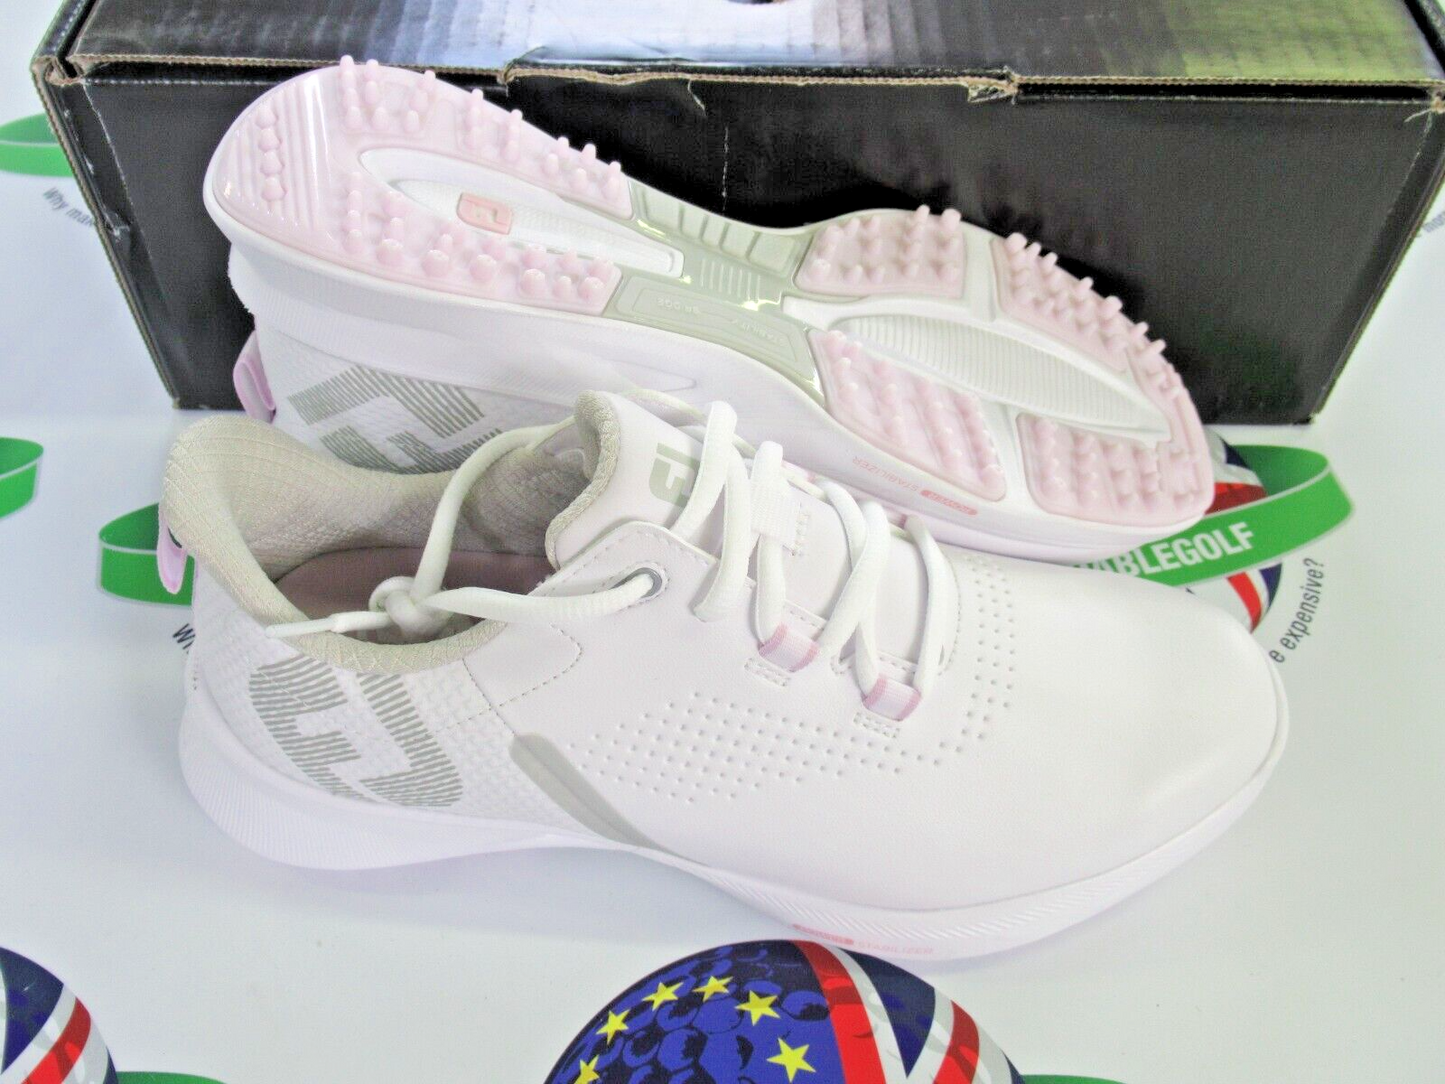 footjoy fuel womens golf shoes white/grey/pink 92373k uk size 7.5 medium